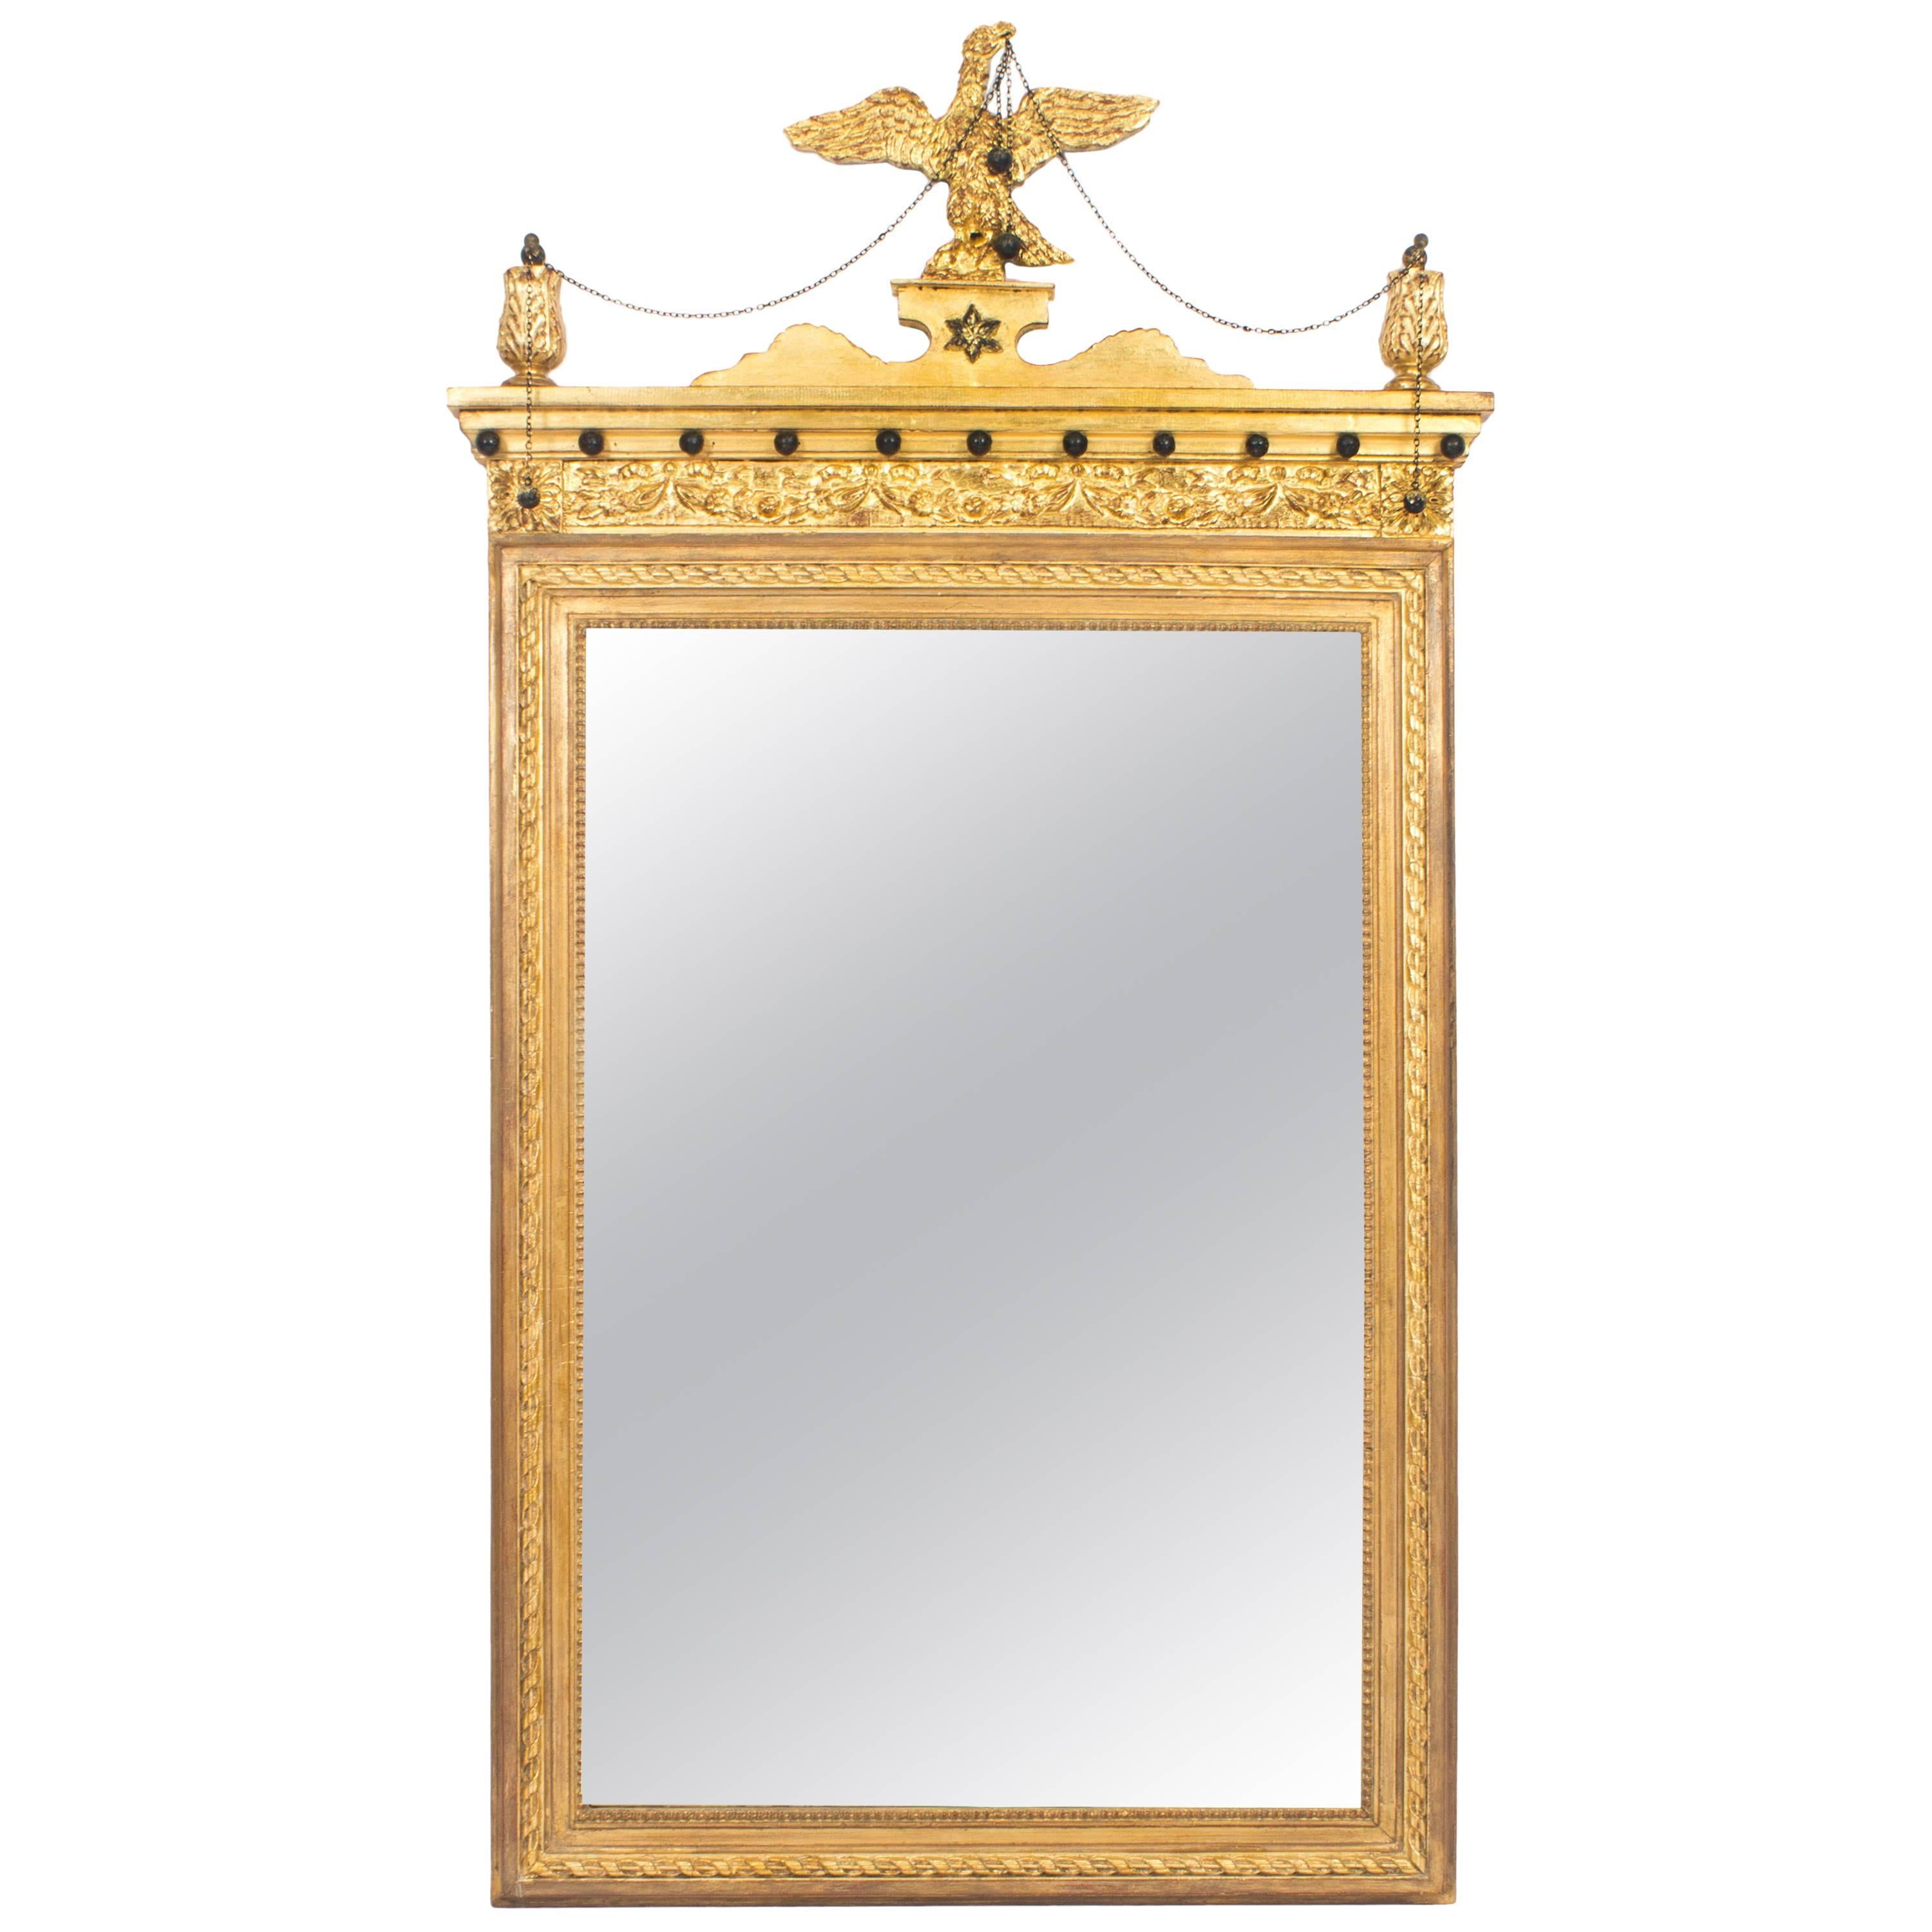 19th Century George II Style Parcel-Gilt Wall Mirror